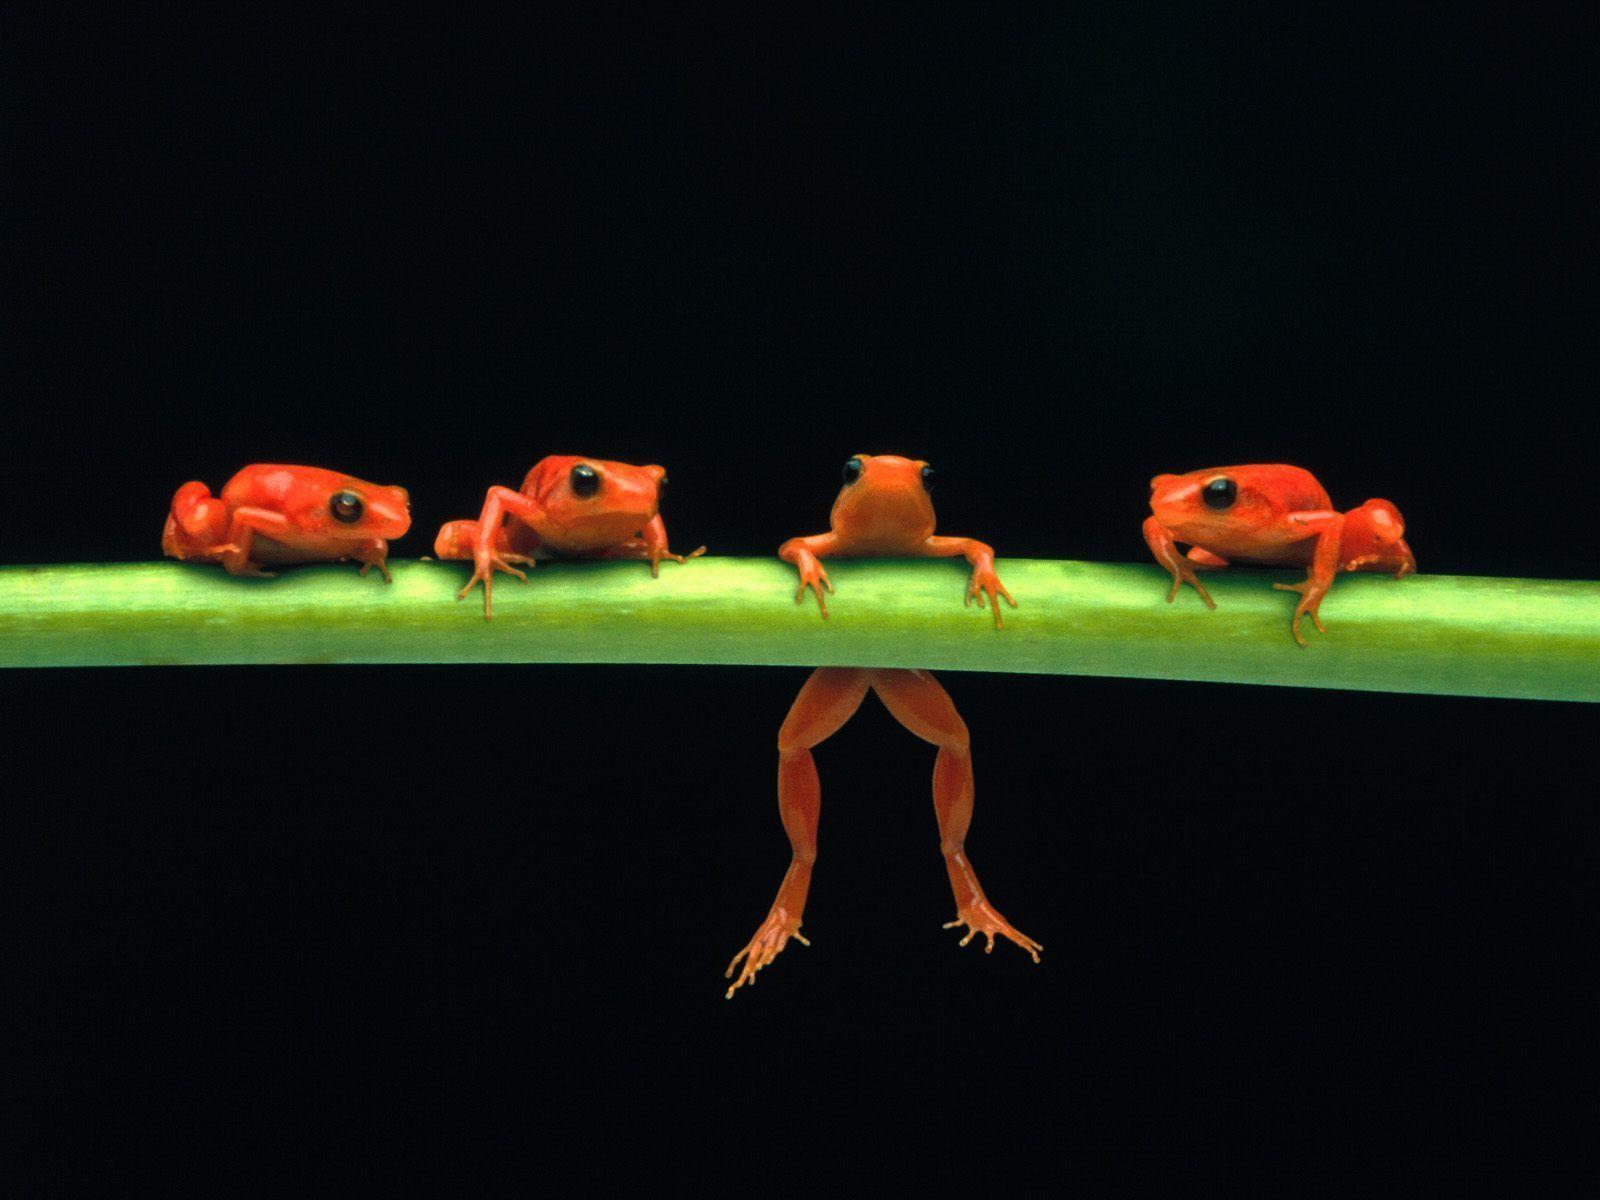 Best Poisonous Red Frog Wallpaper HD 21398 Wallpaper. High